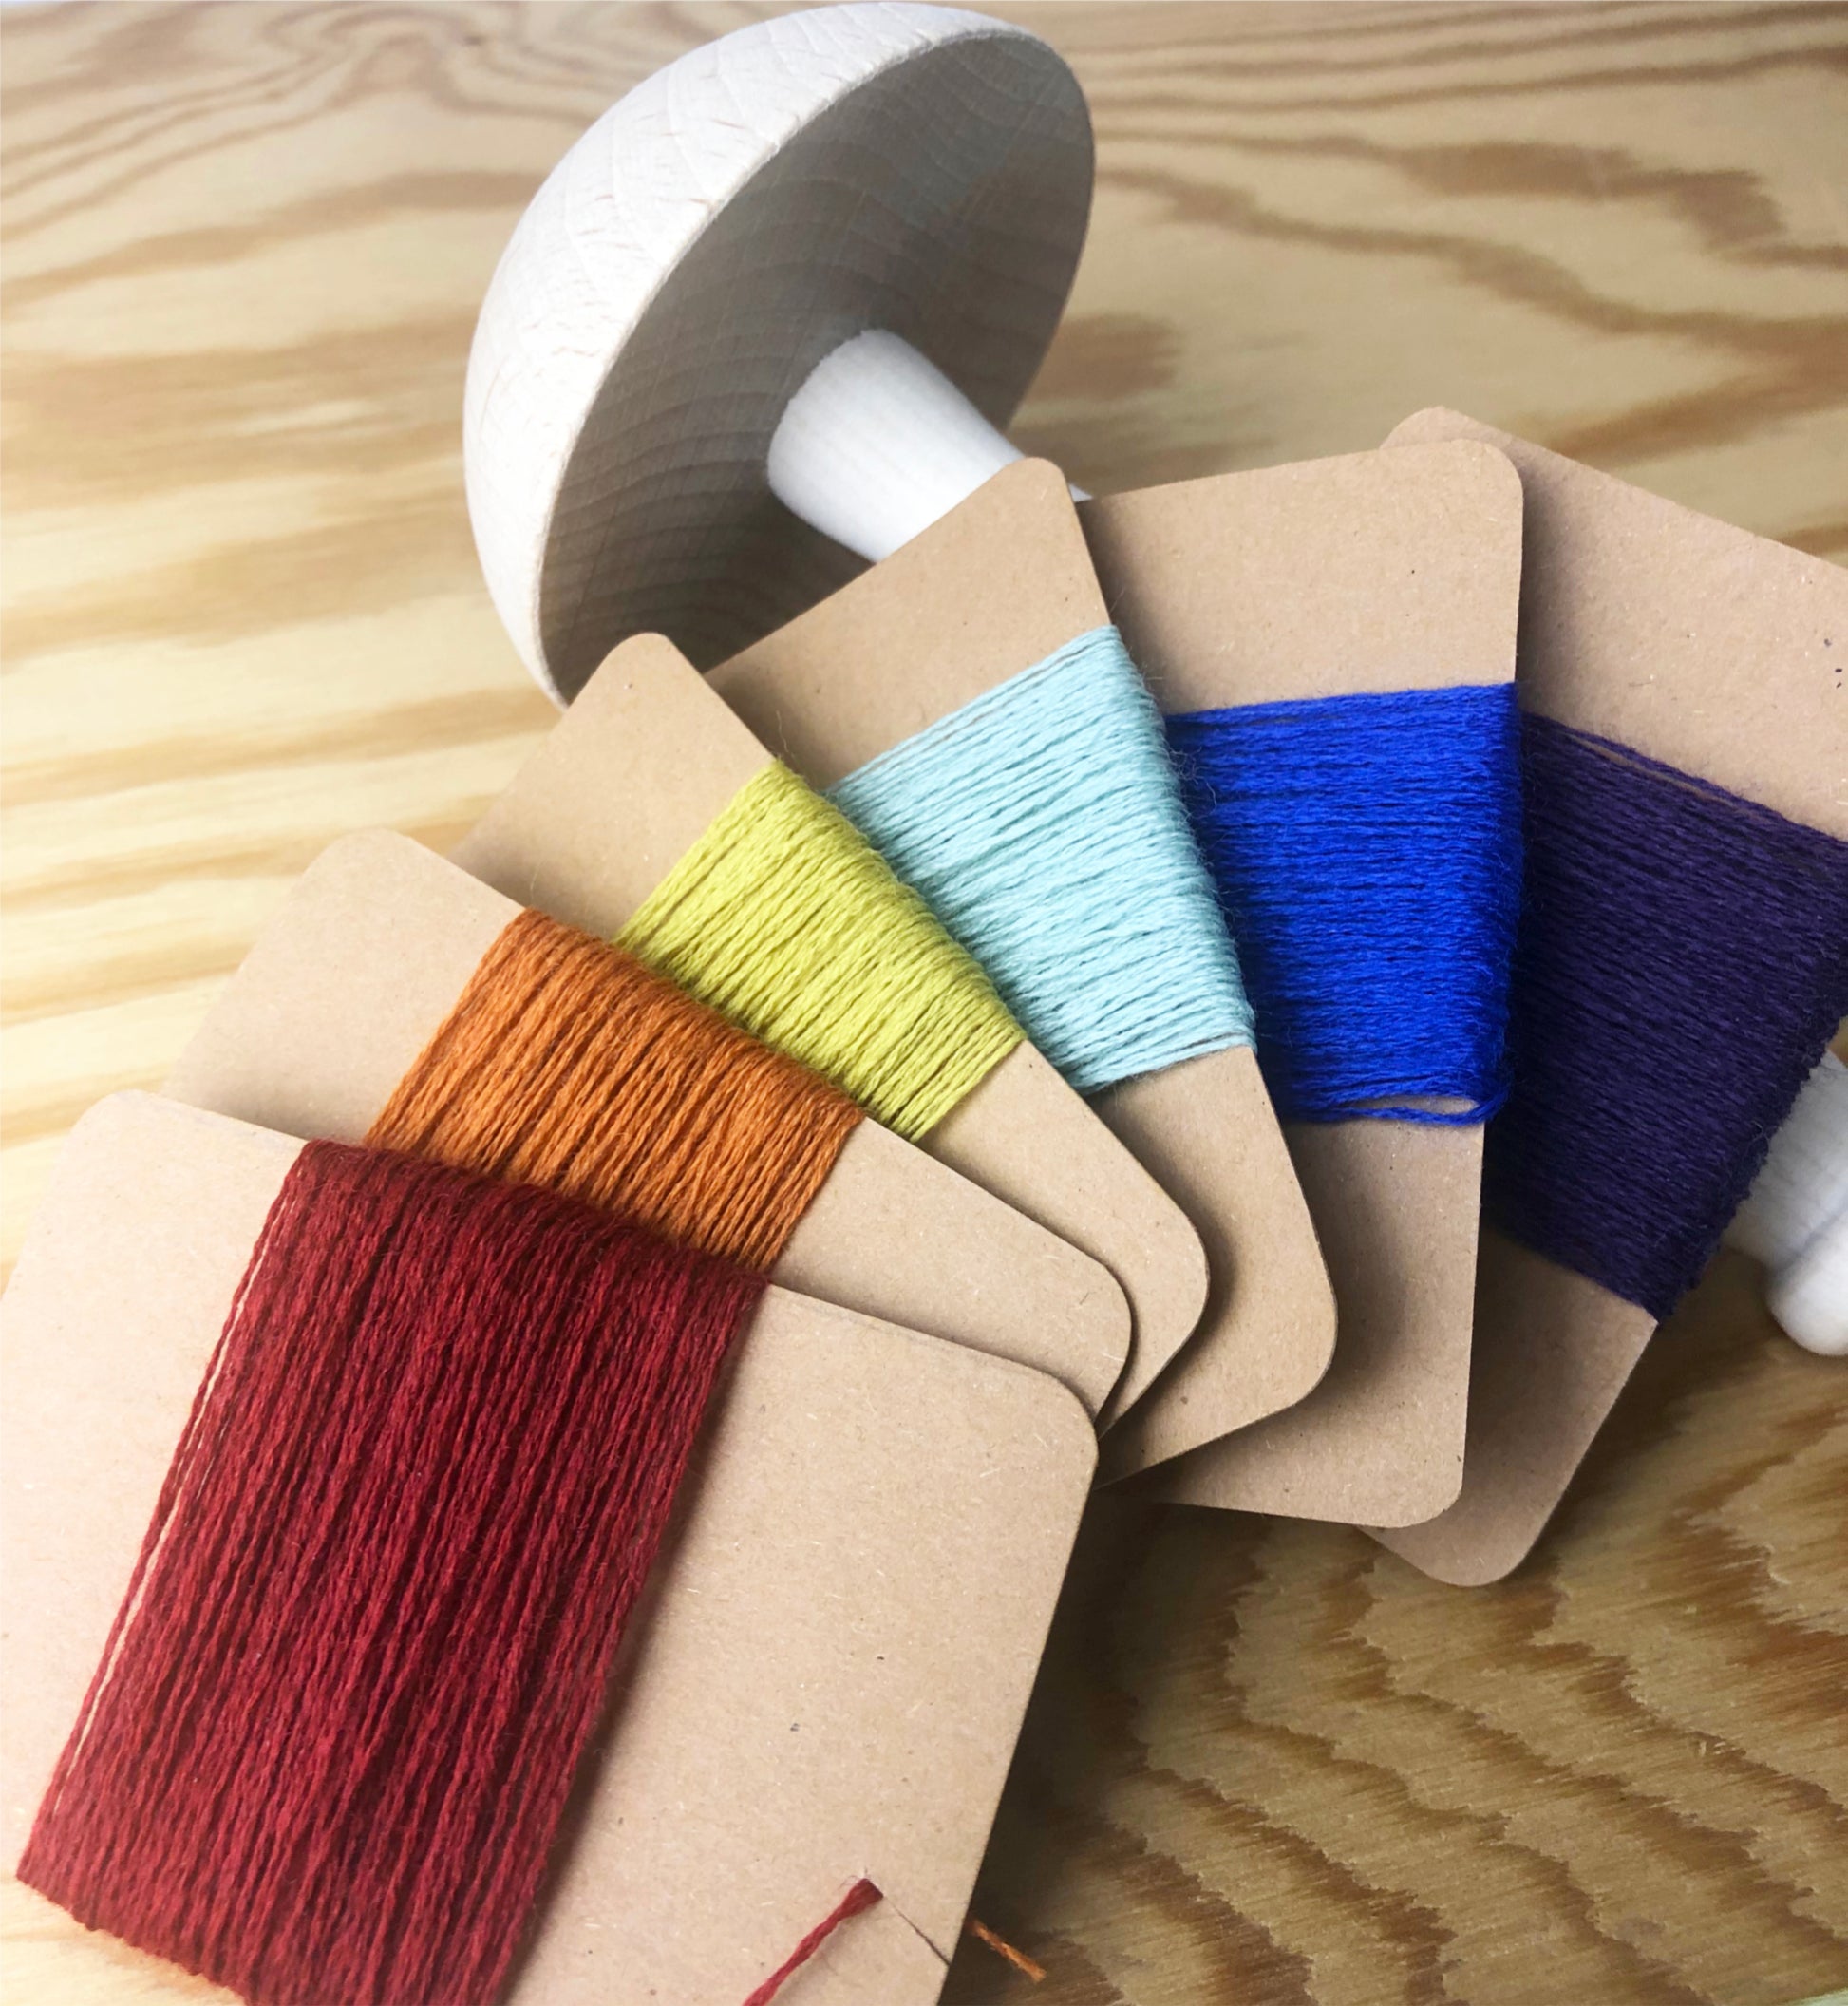 DIY Kit Darning Mushroom Patching Tool Wooden Darning Supplies Pants  Clothes Socks Bag Home Sewing Wood Mending Device - AliExpress